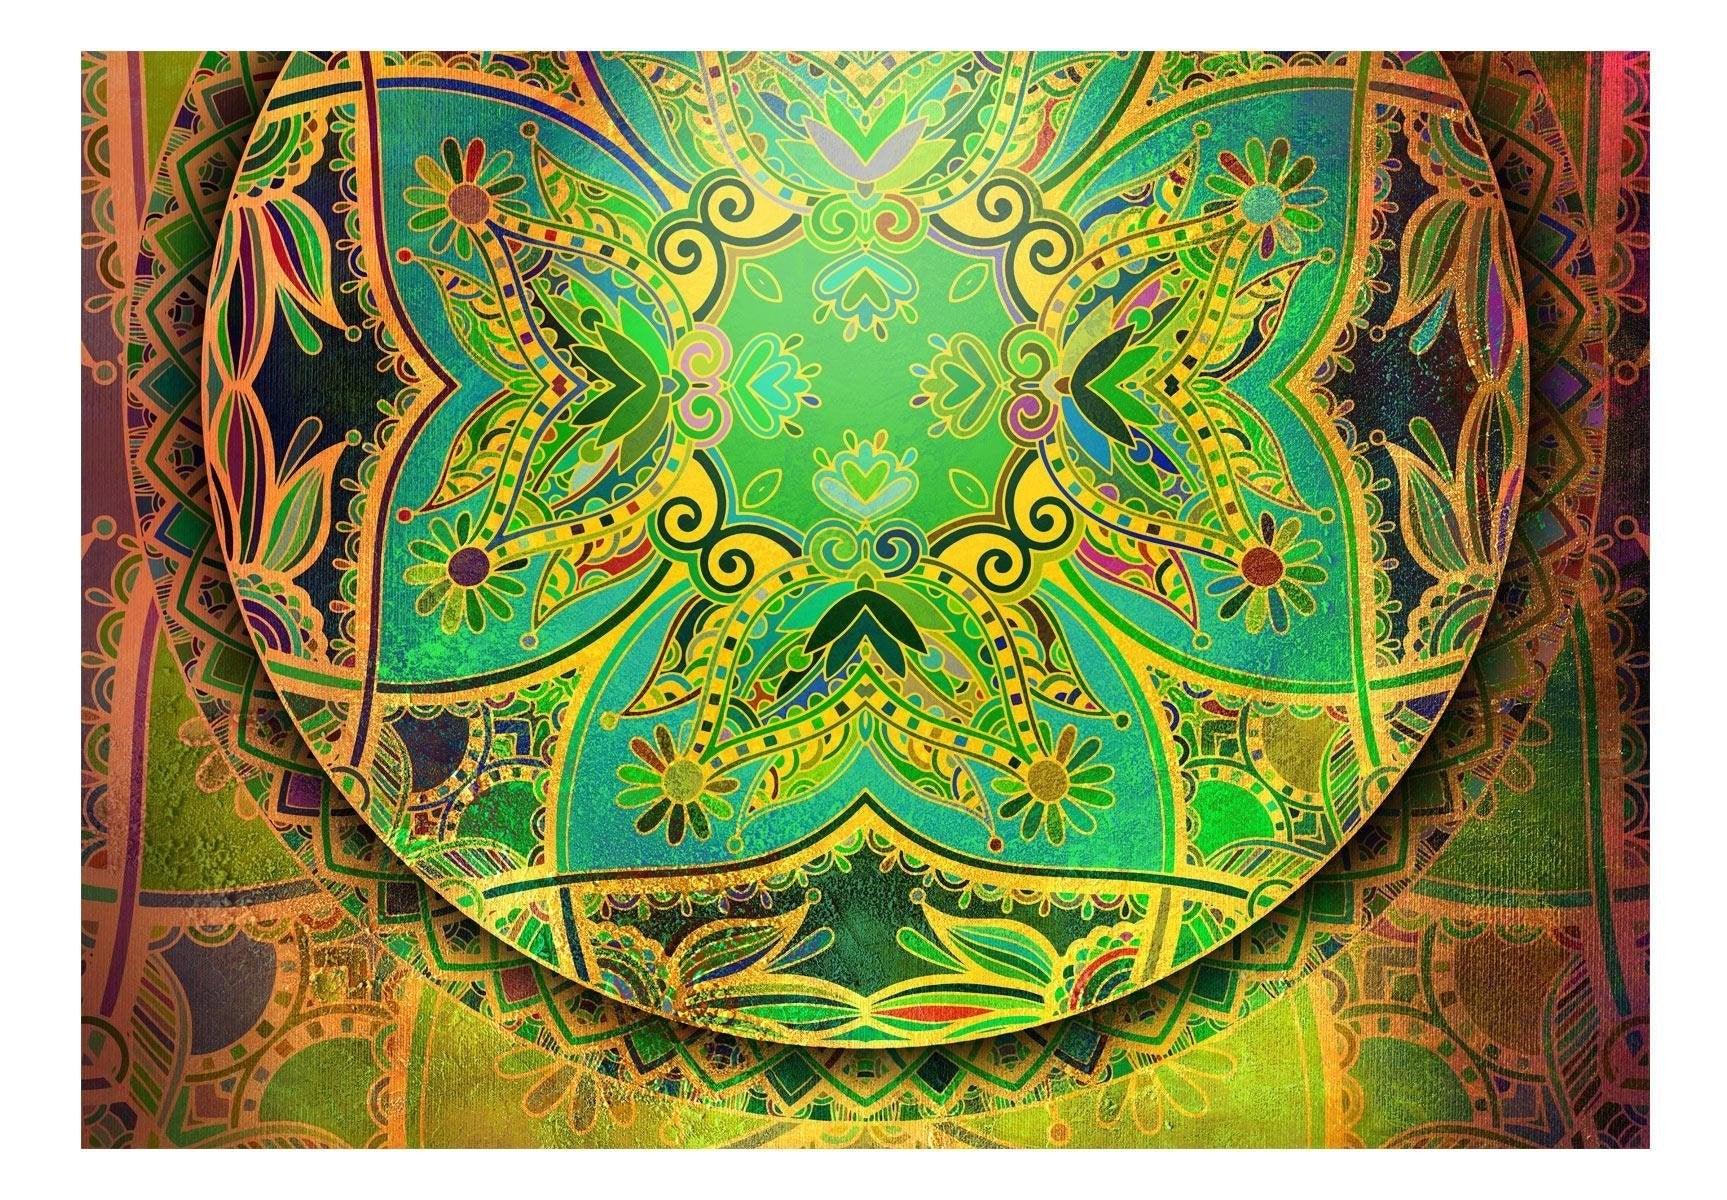 Peel and stick wall mural - Mandala: Emerald Fantasy - www.trendingbestsellers.com